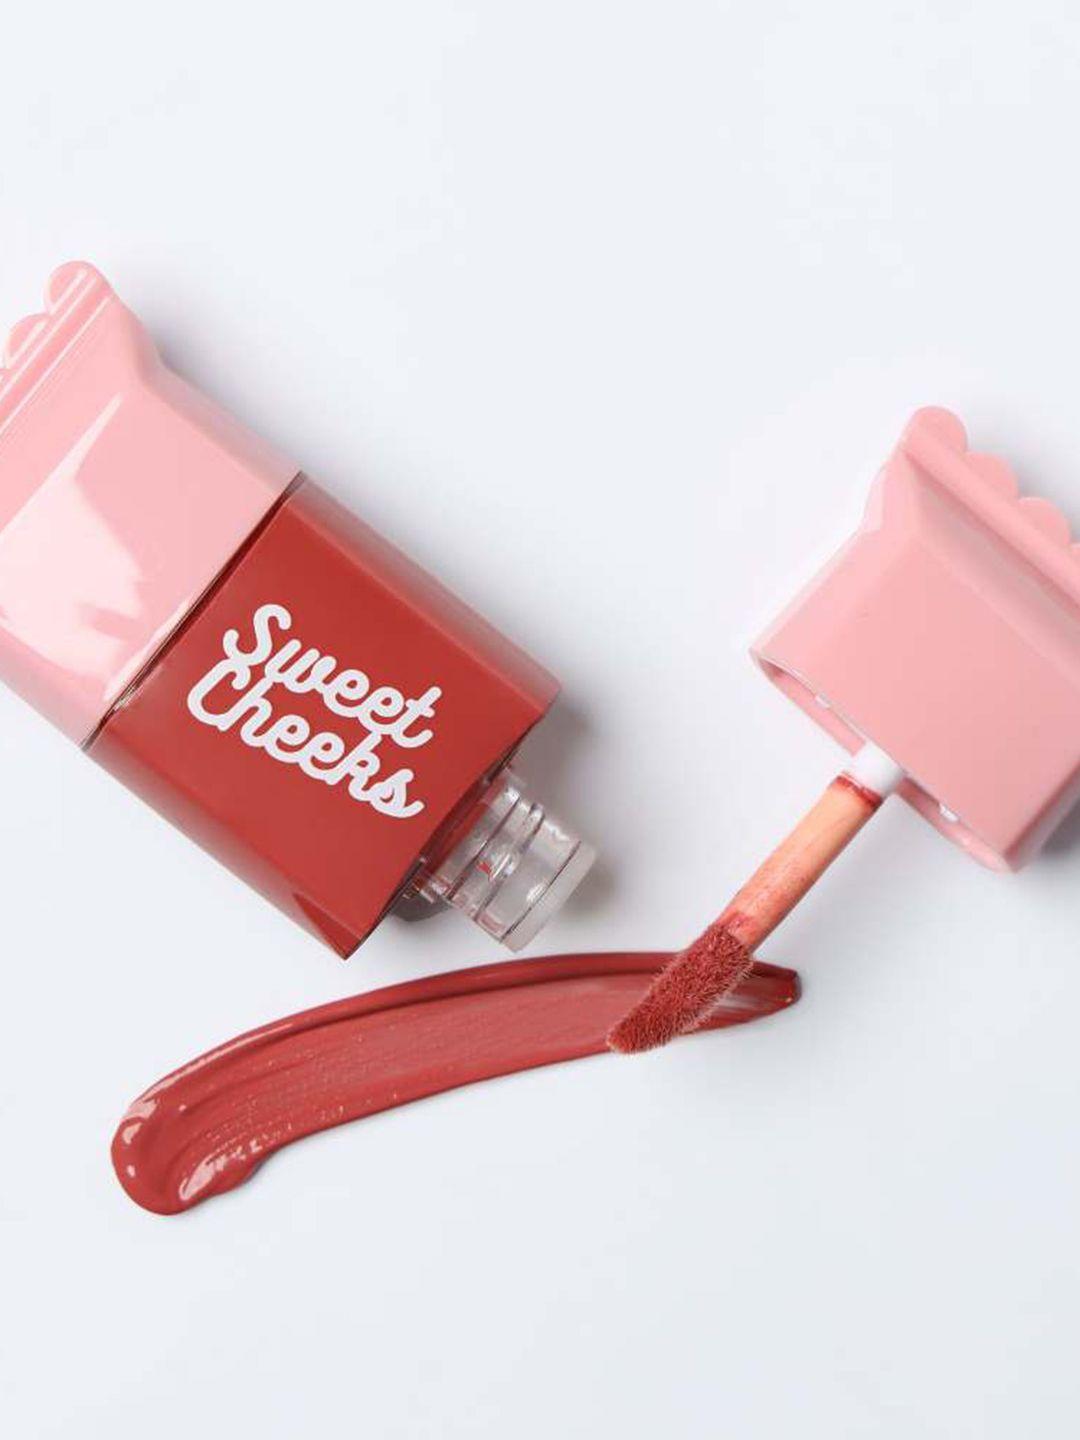 praush sweet cheeks ultra lightweight & buildable liquid blush 10g - caramel glaze